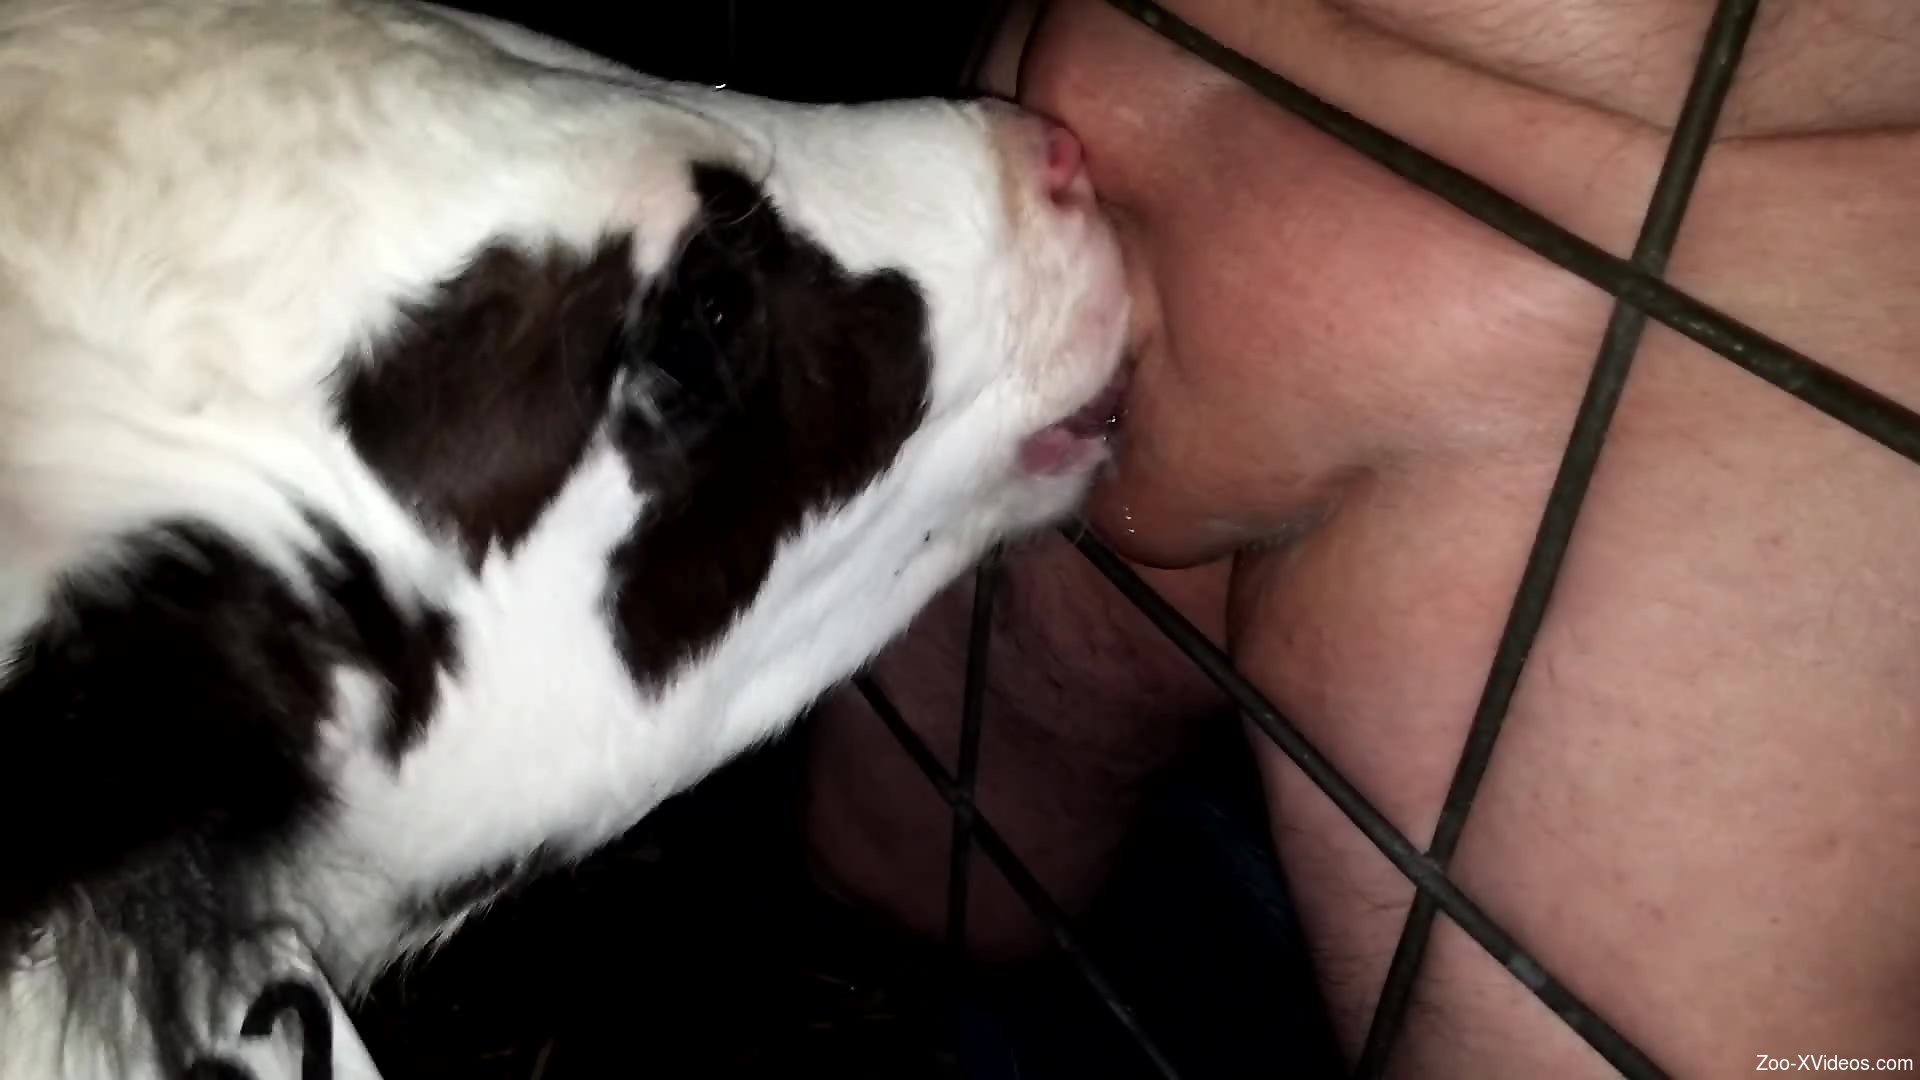 Dog Licking Guys Dick - Baby veal licks man's penis until he cums hard